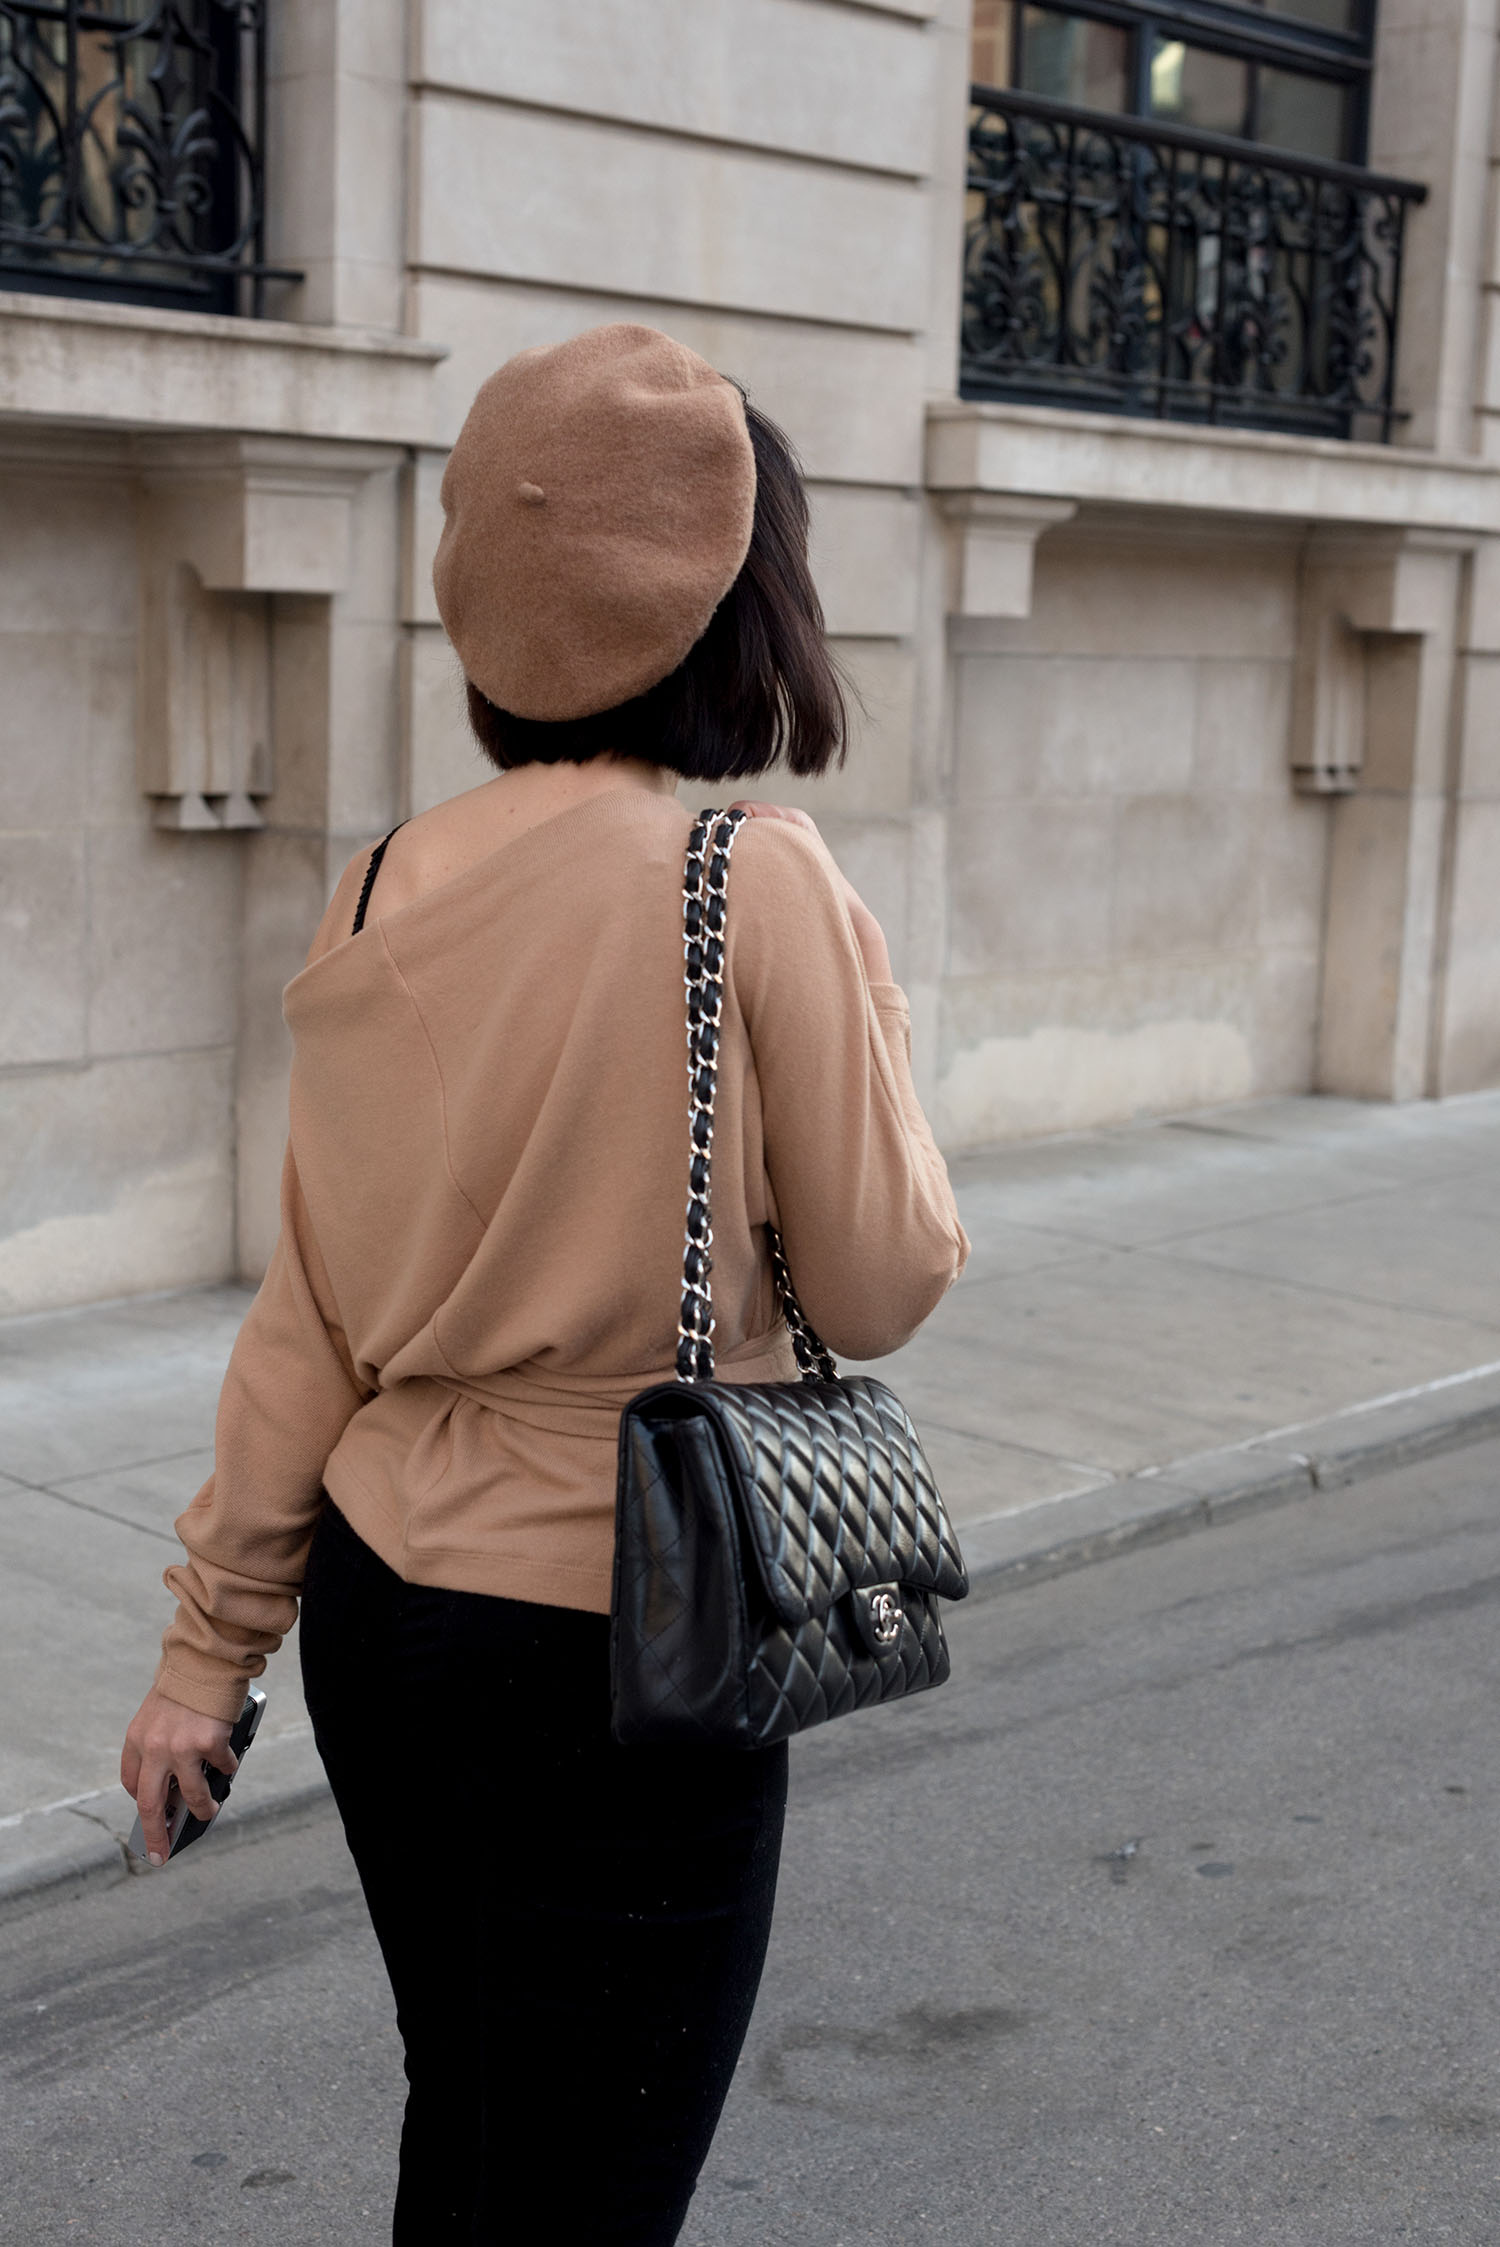 Coco & Vera - Chanel jumbo quilted handbag, ASOS beret, Reformation top